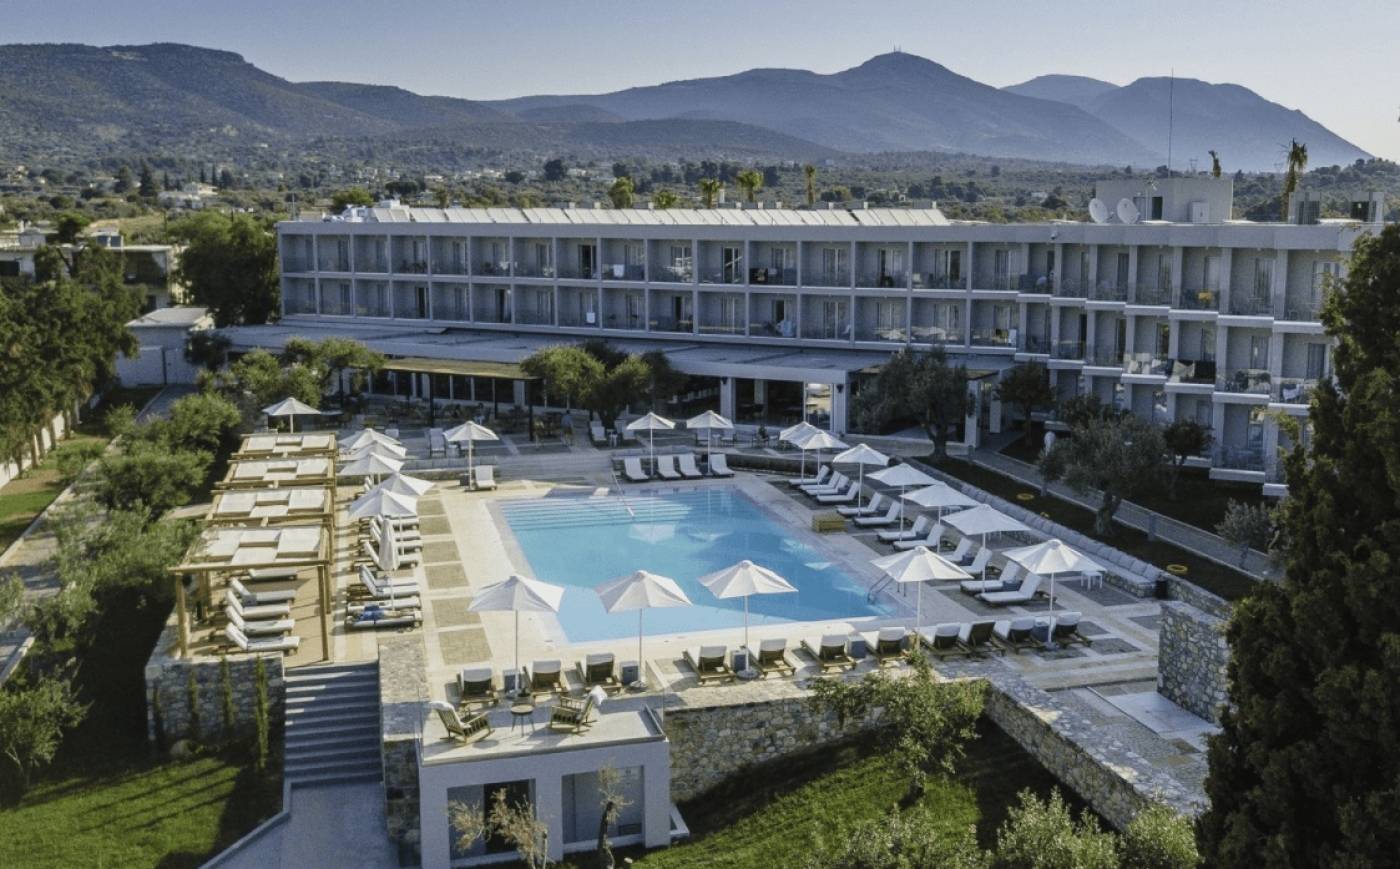 «Amaronda Resort &amp; Spa»: Ενας παράδεισος με θέα - Μεγάλο καλοκαιρινό giveaway! - Κερδίστε διήμερο διακοπών